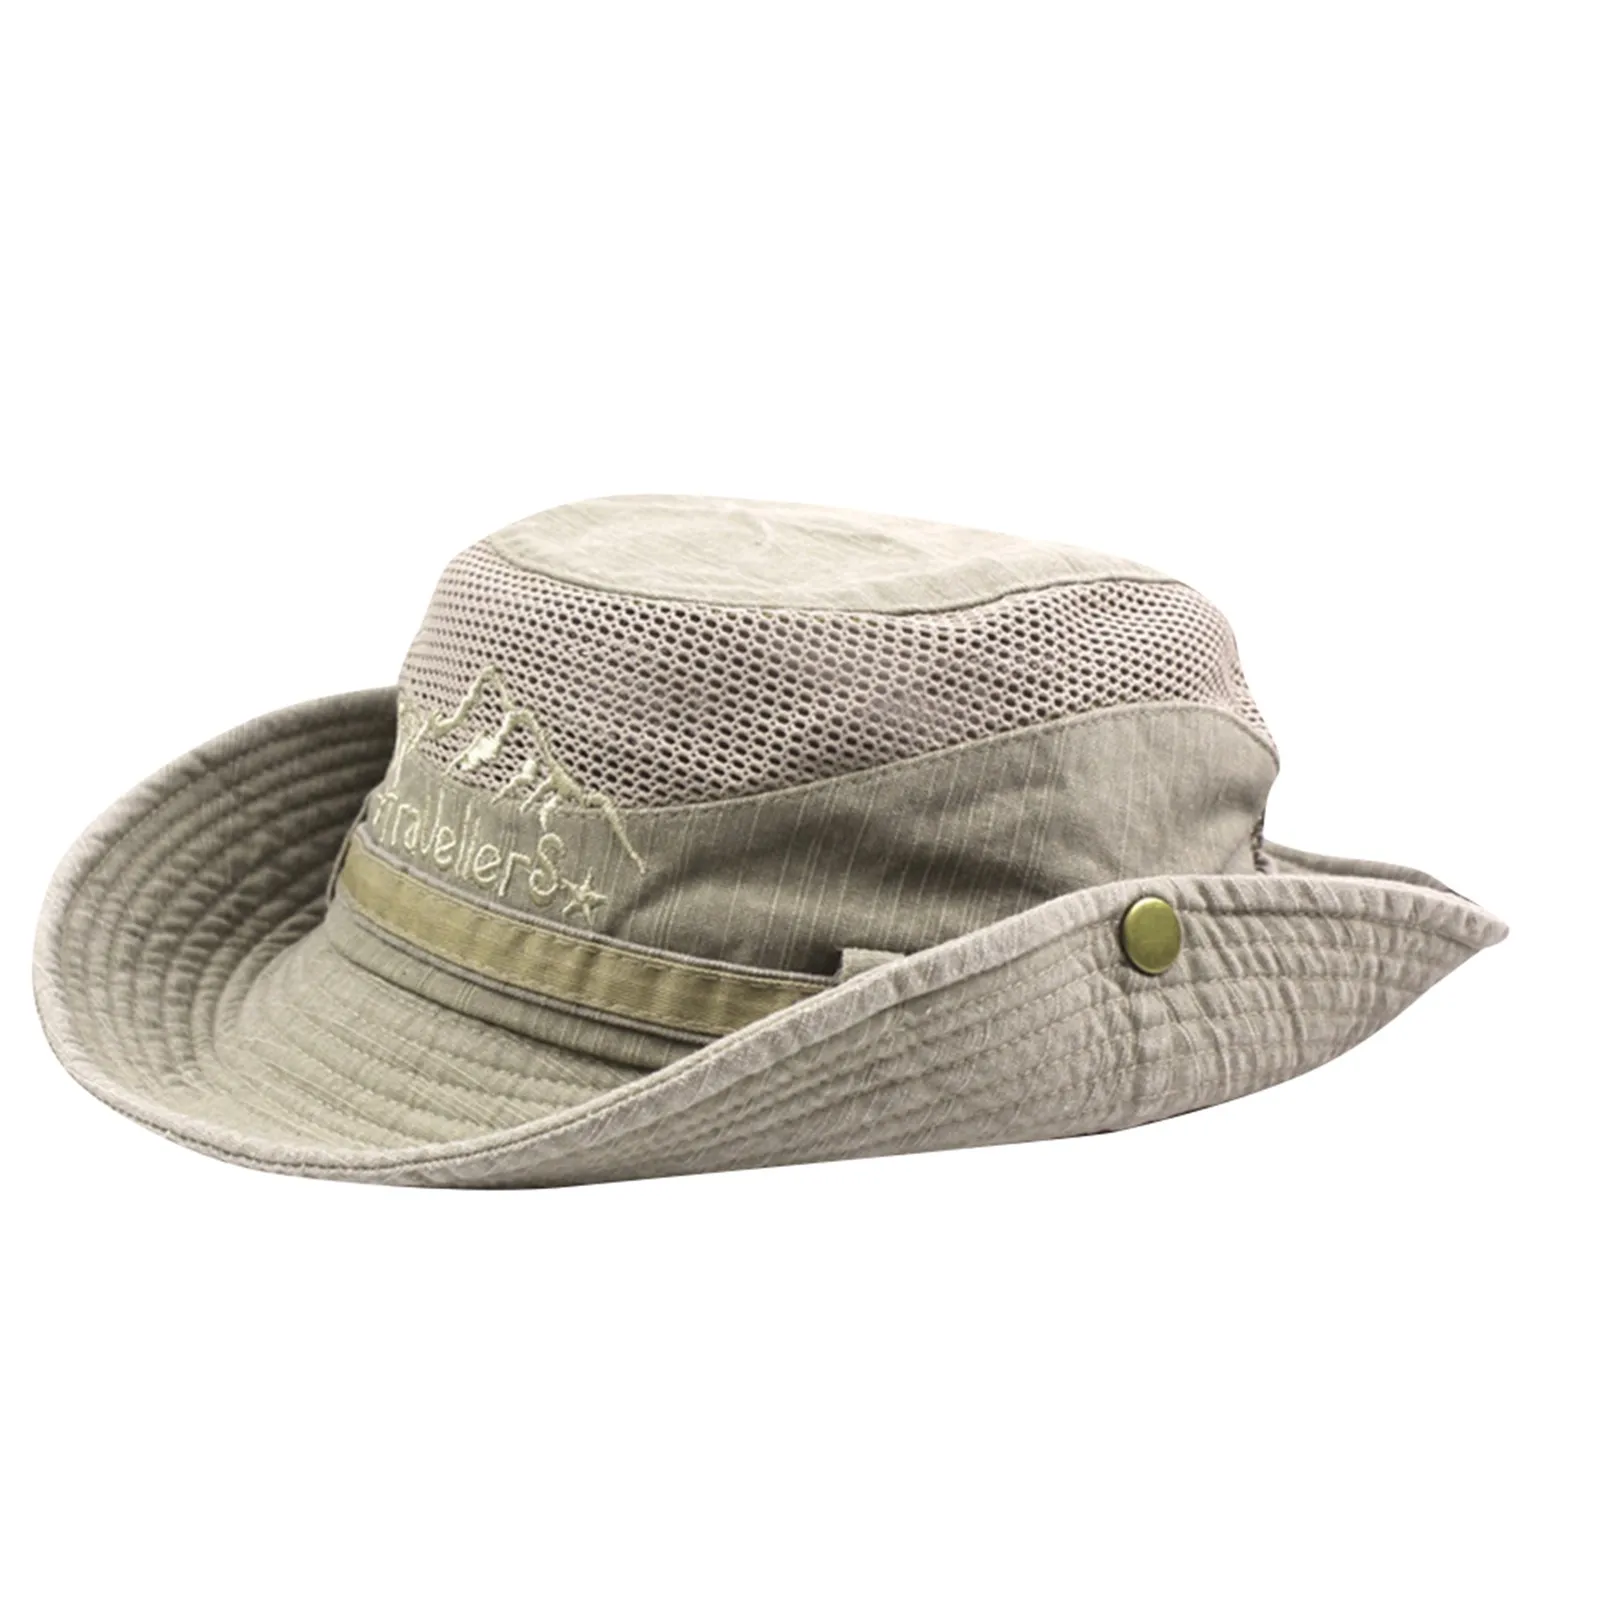 Мужская однотонная рыбацкая шляпа, альпинистская шляпа, уличная шляпа с зонтиком, хлопковая высококачественная сетчатая шляпа Casquette Homme